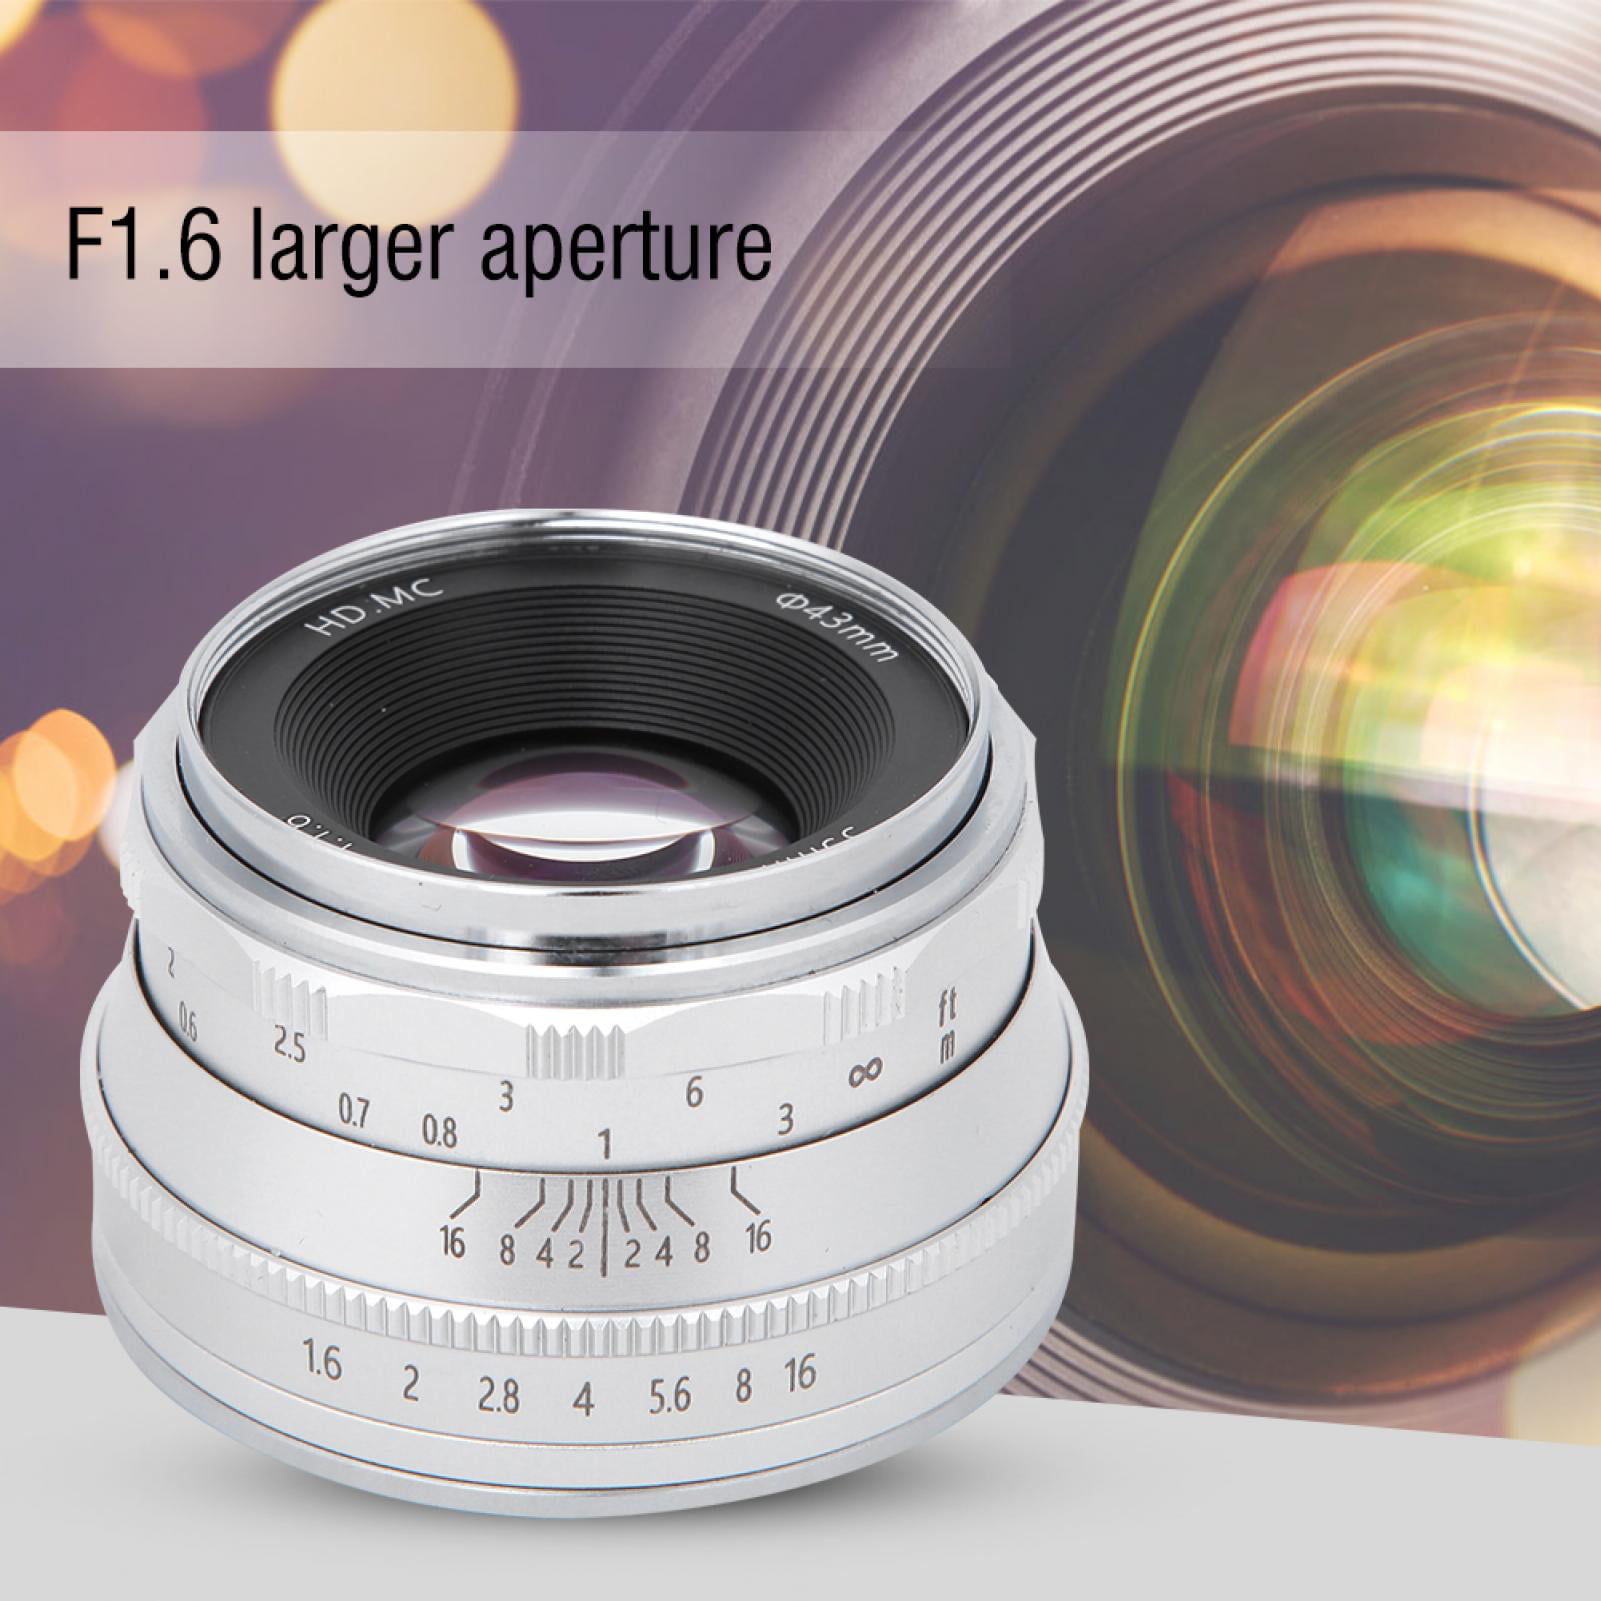 Mirrorless Camera Lens for Fujifilm XT3 XT100 XT20,35mm F1.6 Manual Focusing Multilayer Film Coating Camera FX Mount Lens with Storage Bag Silver